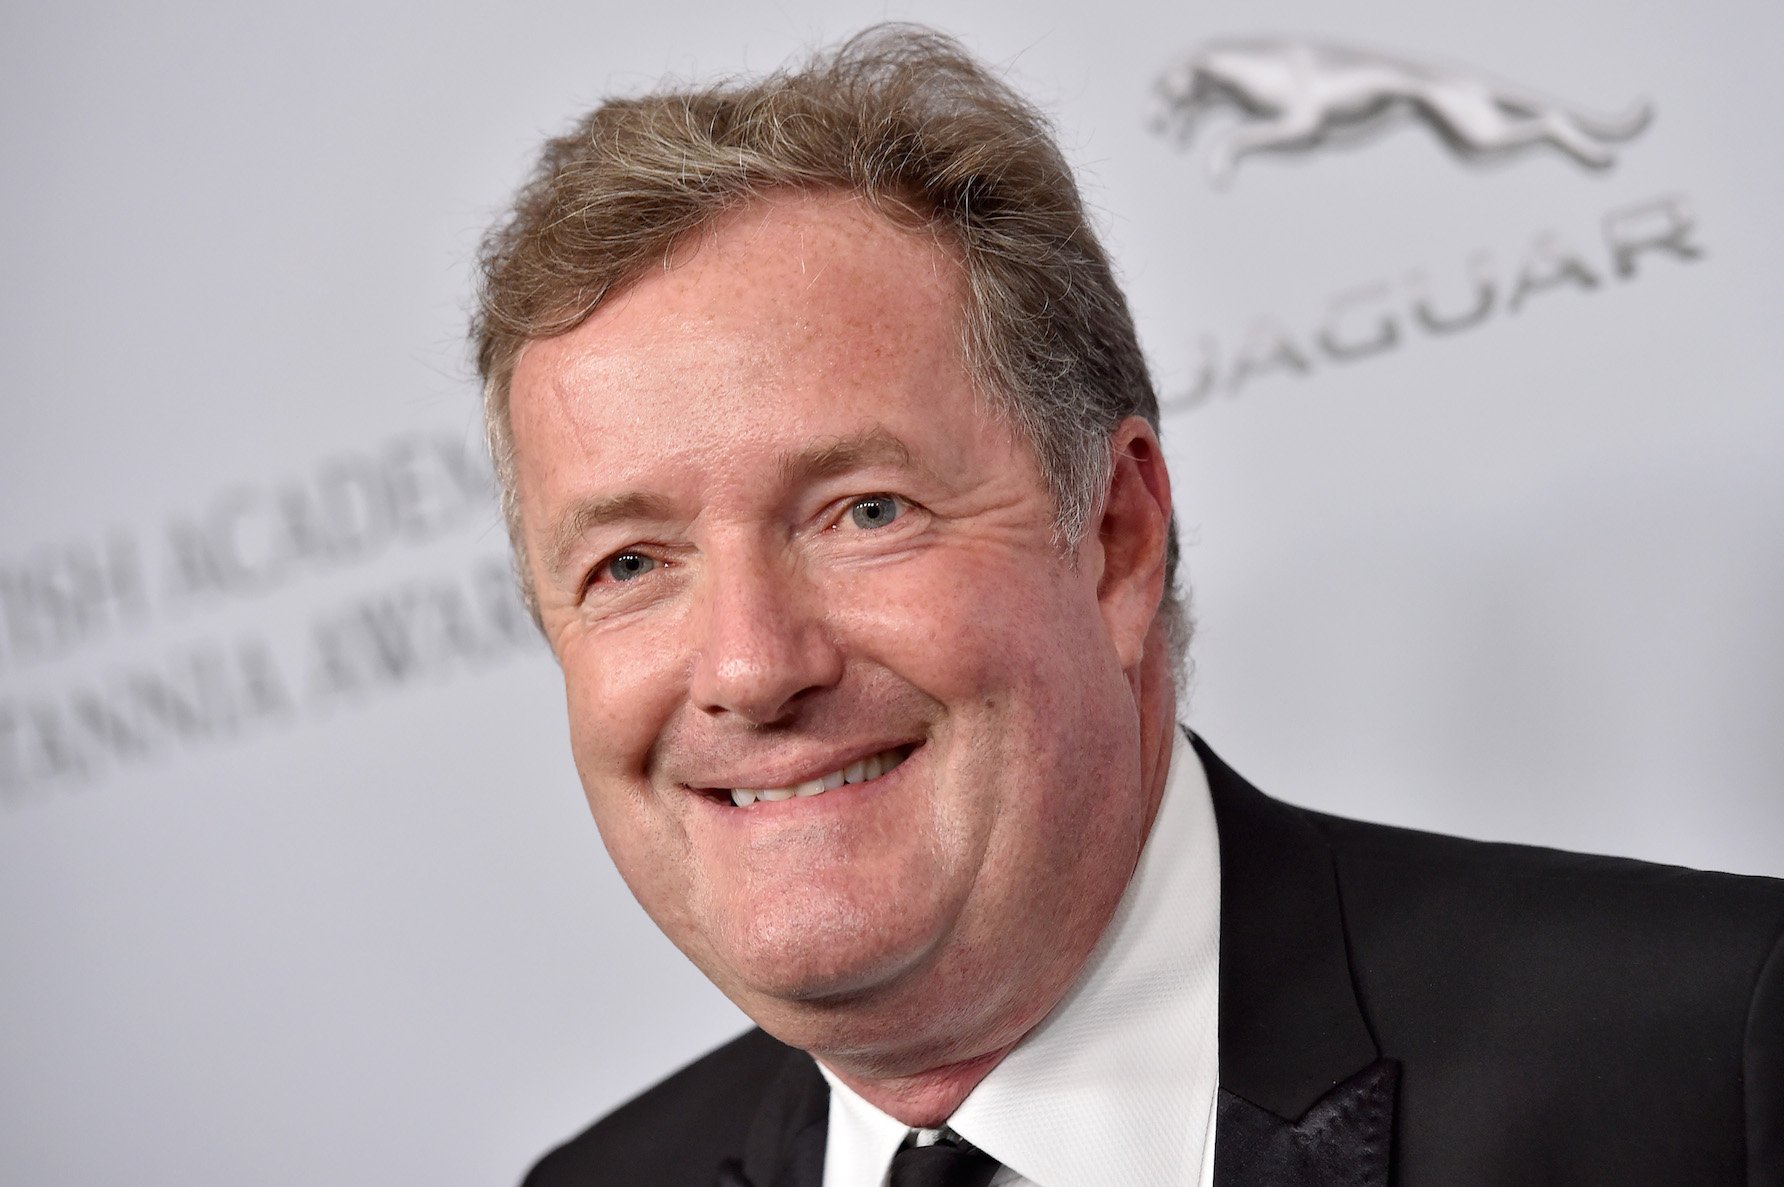 A headshot of Piers Morgan smiling at an awards show